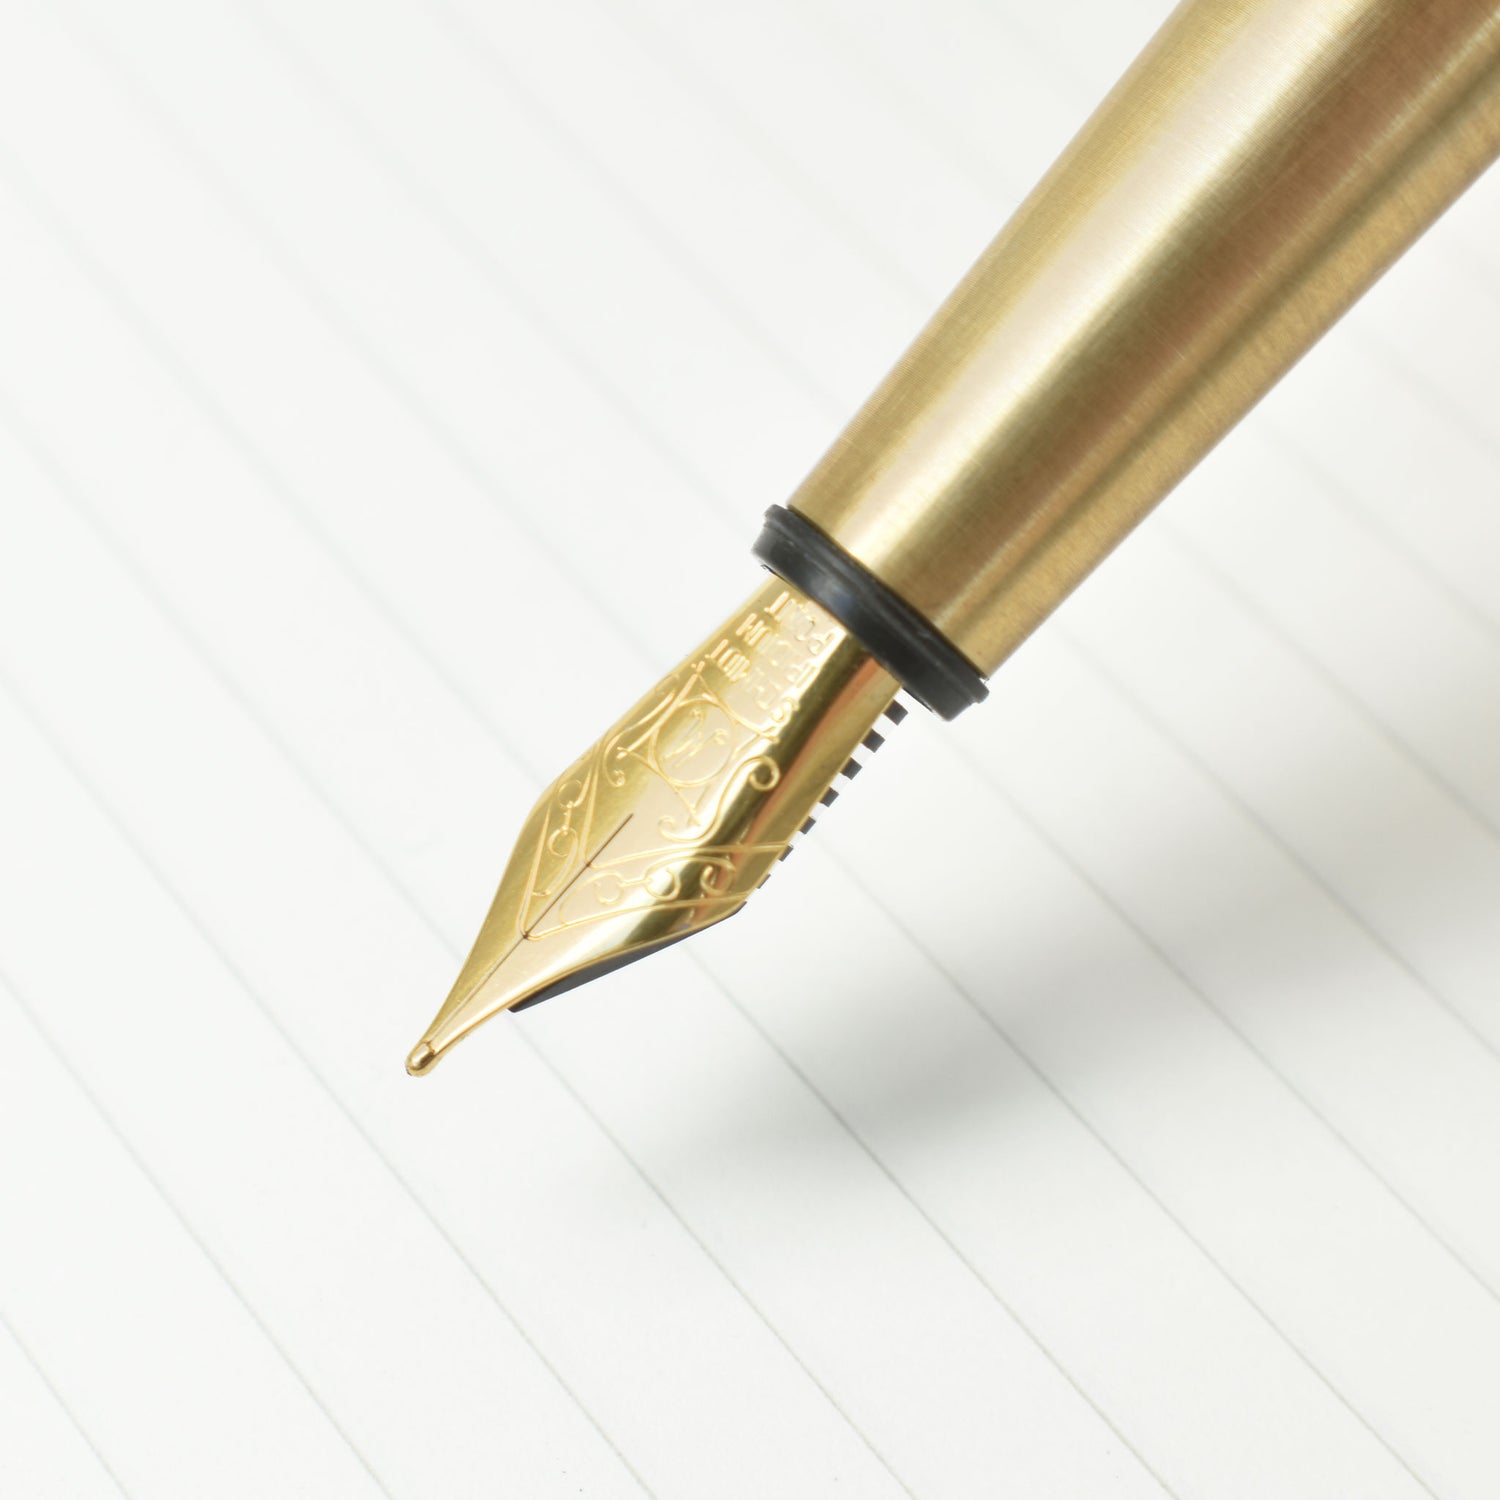 Close up image of the gold plated Schmidt medium nib. Method brass fountain pen. 